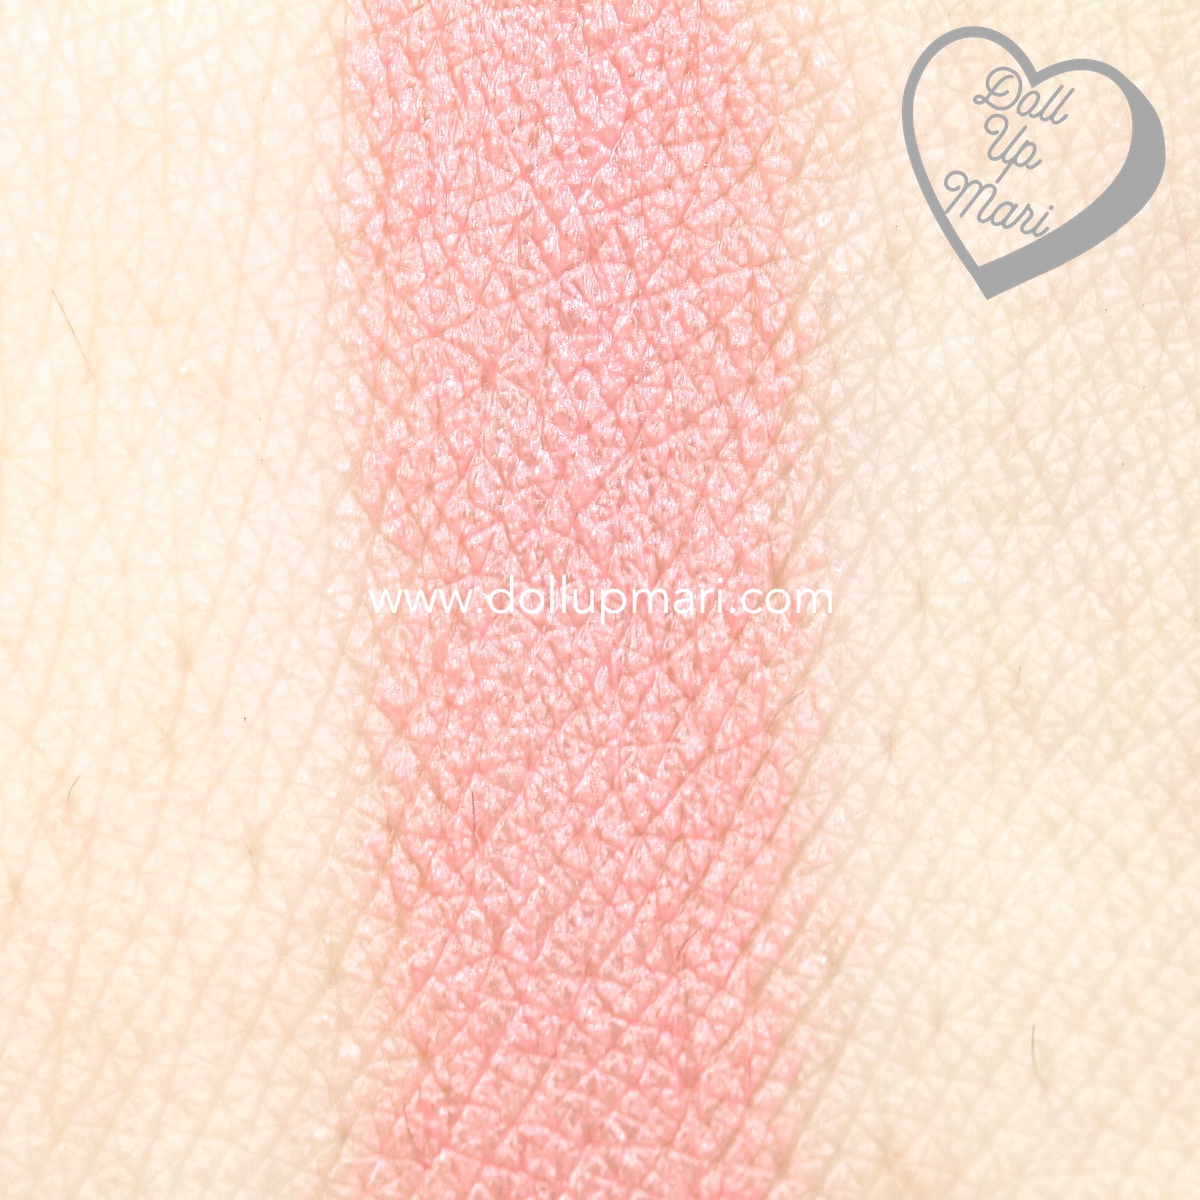 swatch of Blush Shade of AVON Perfectly Matte Lipstick